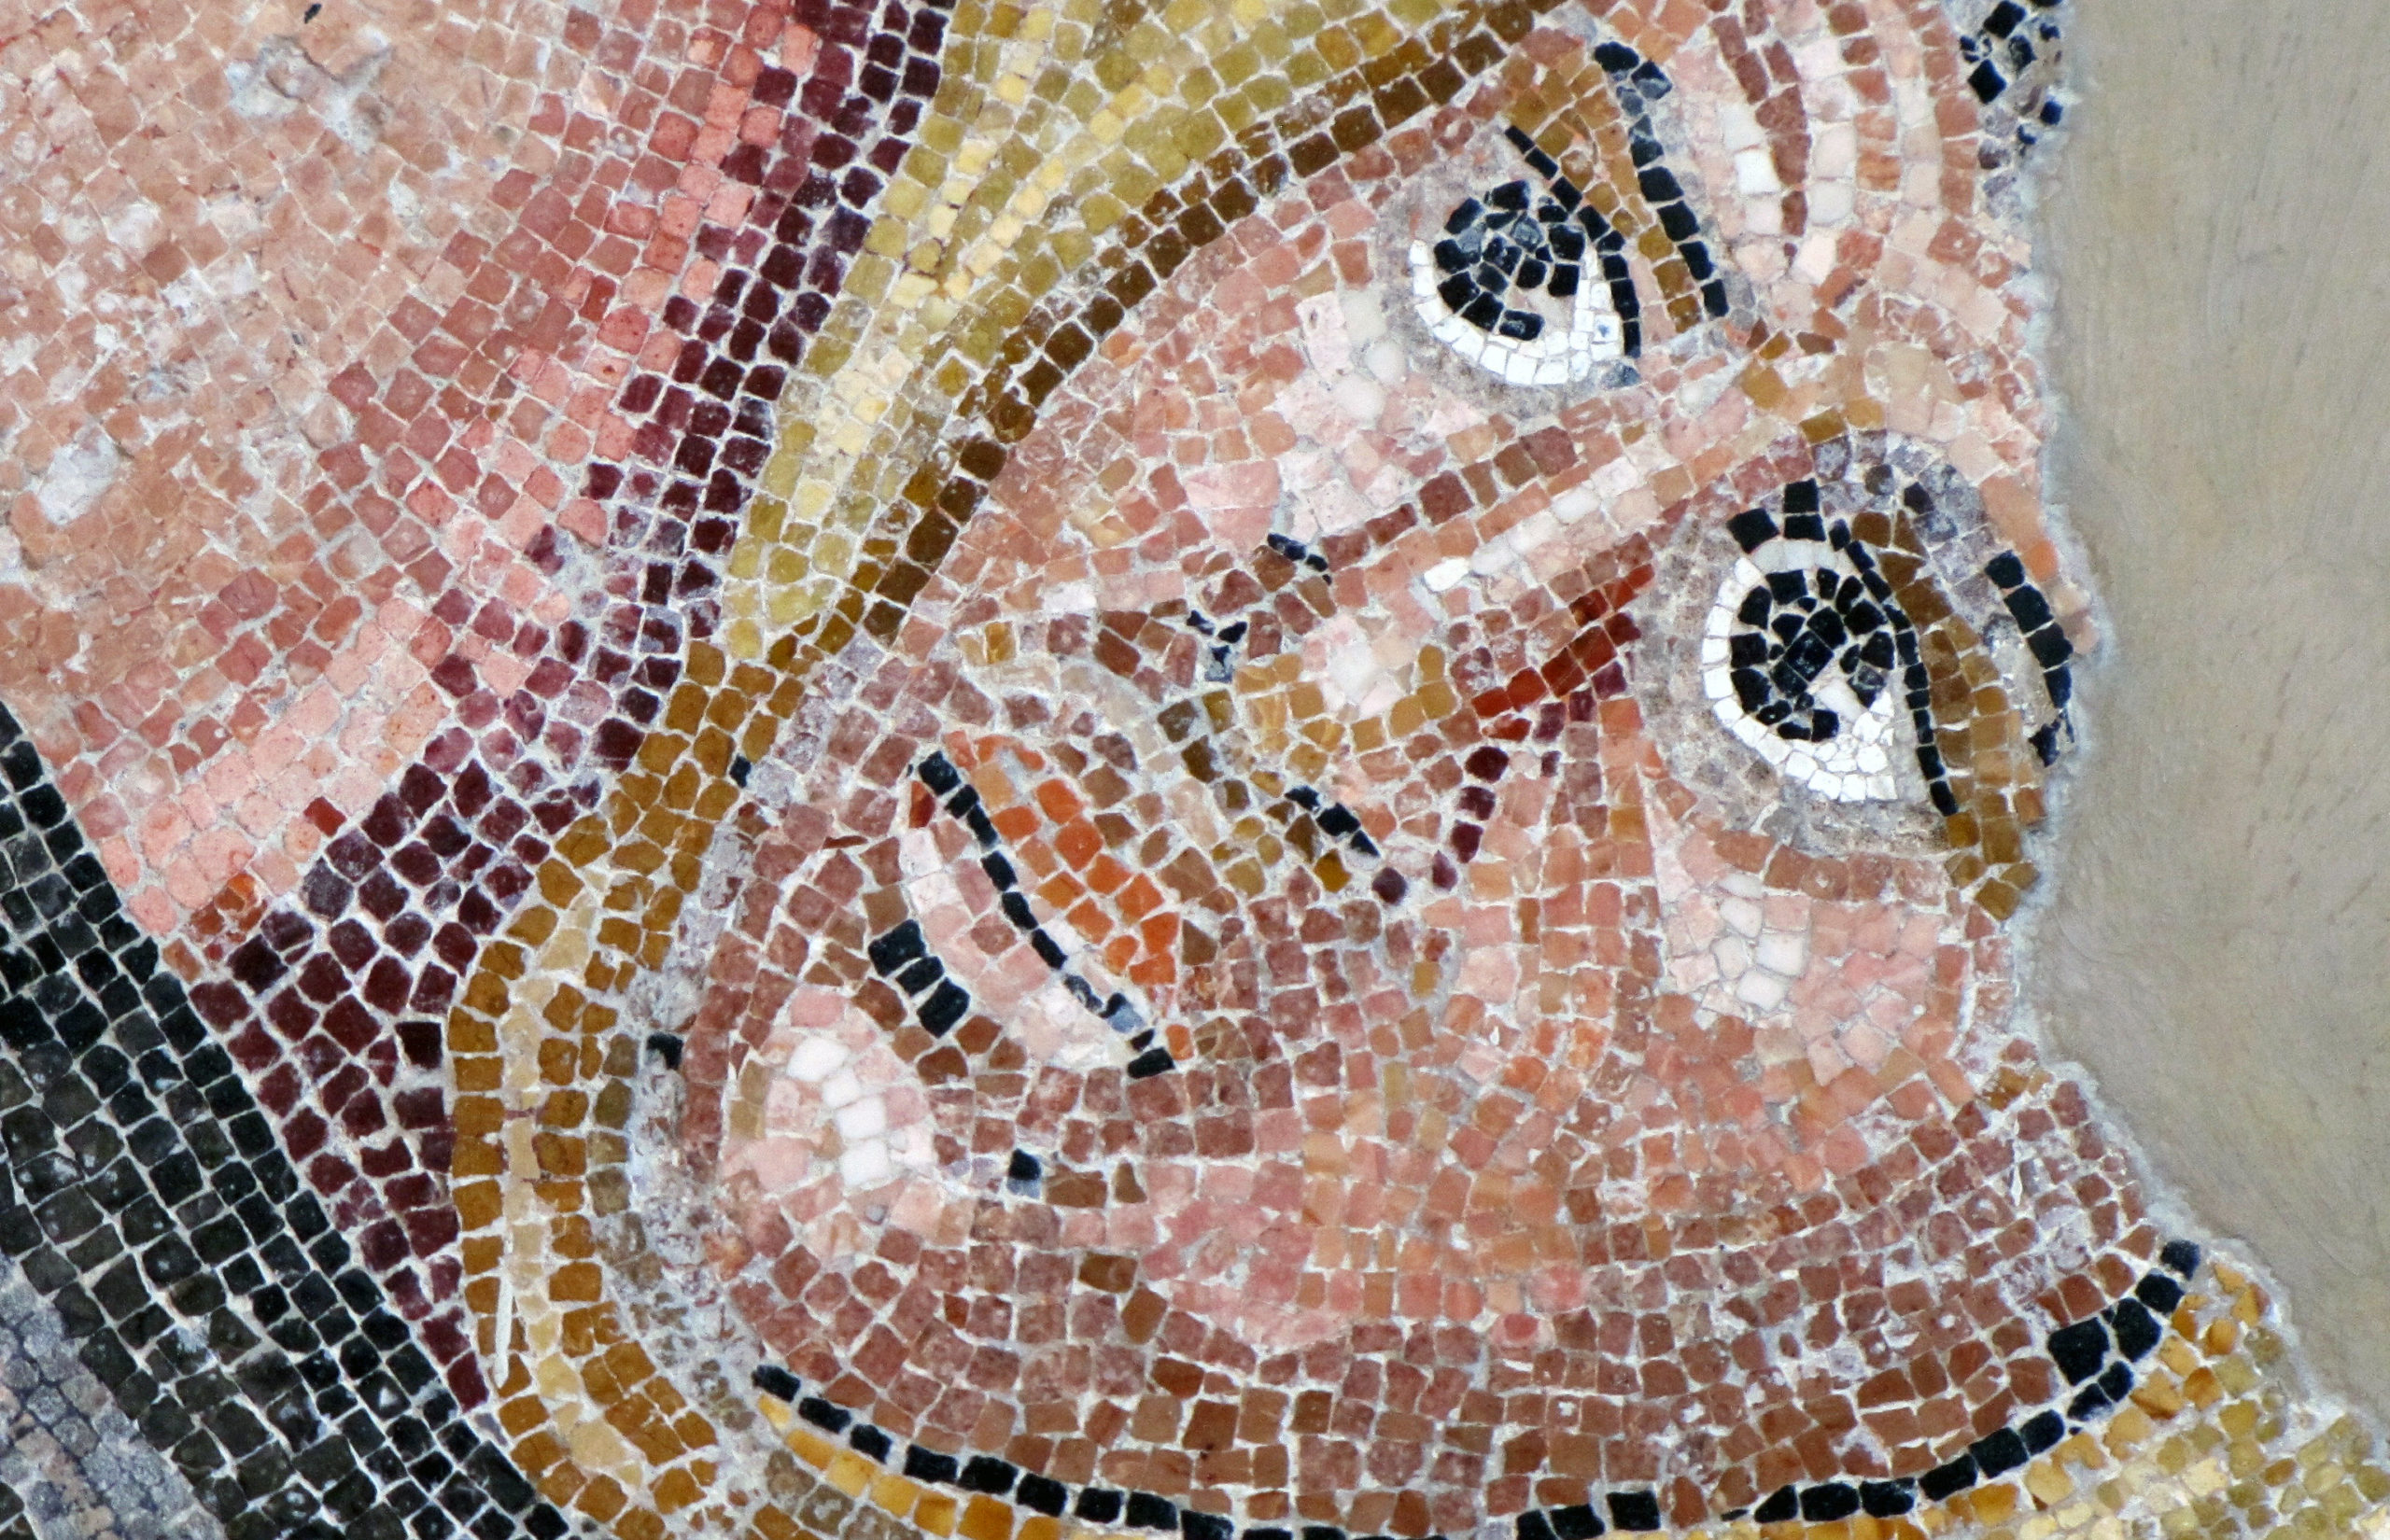 alexander mosaic detail